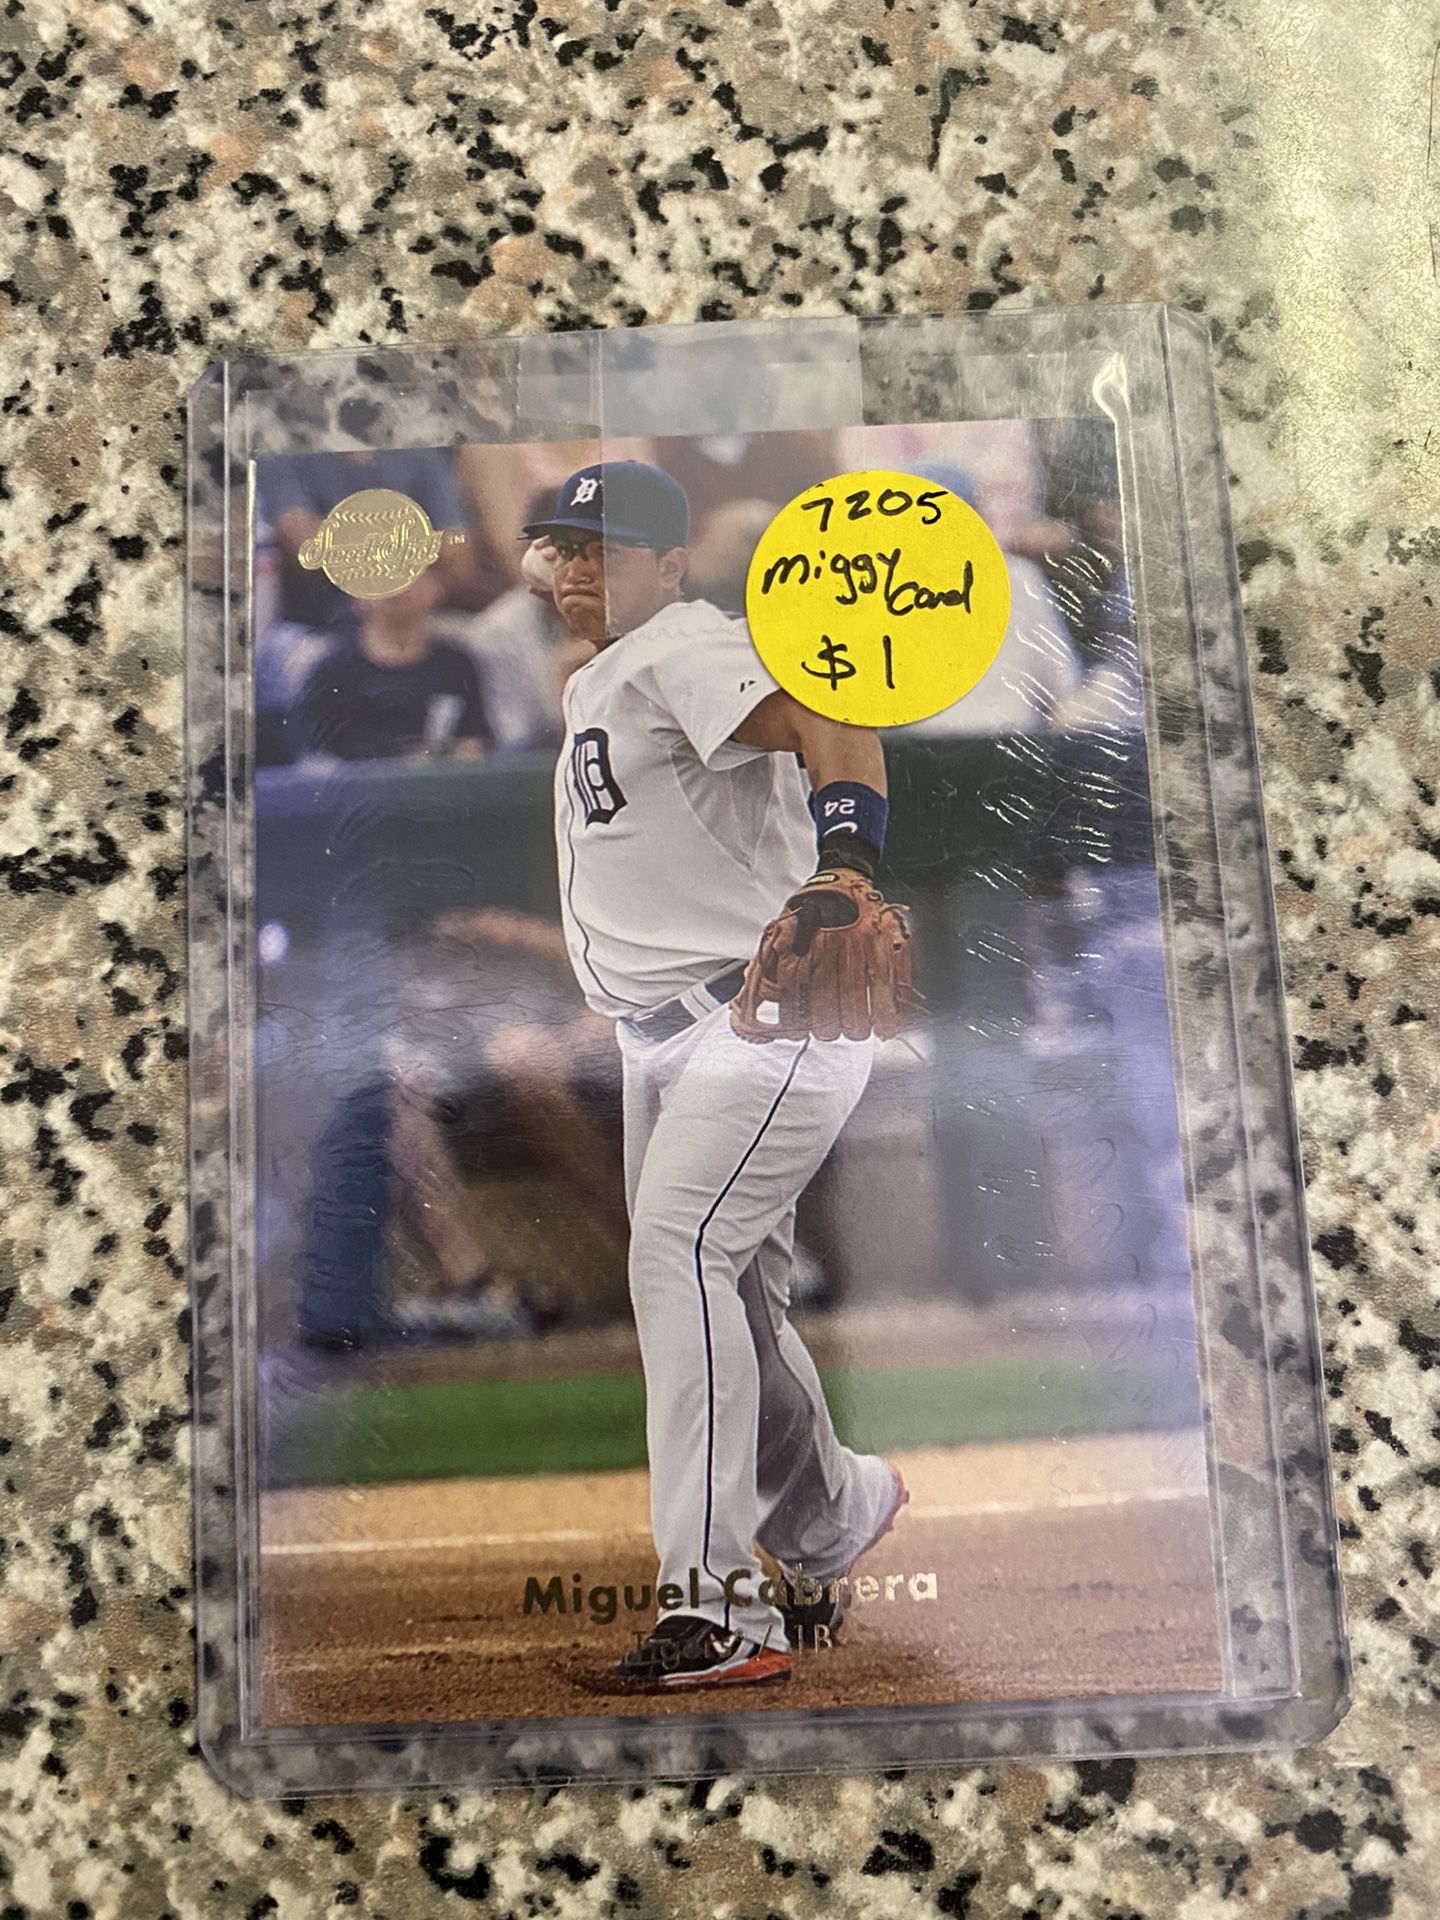 Miguel Cabrera Premium baseball card Tigers cool